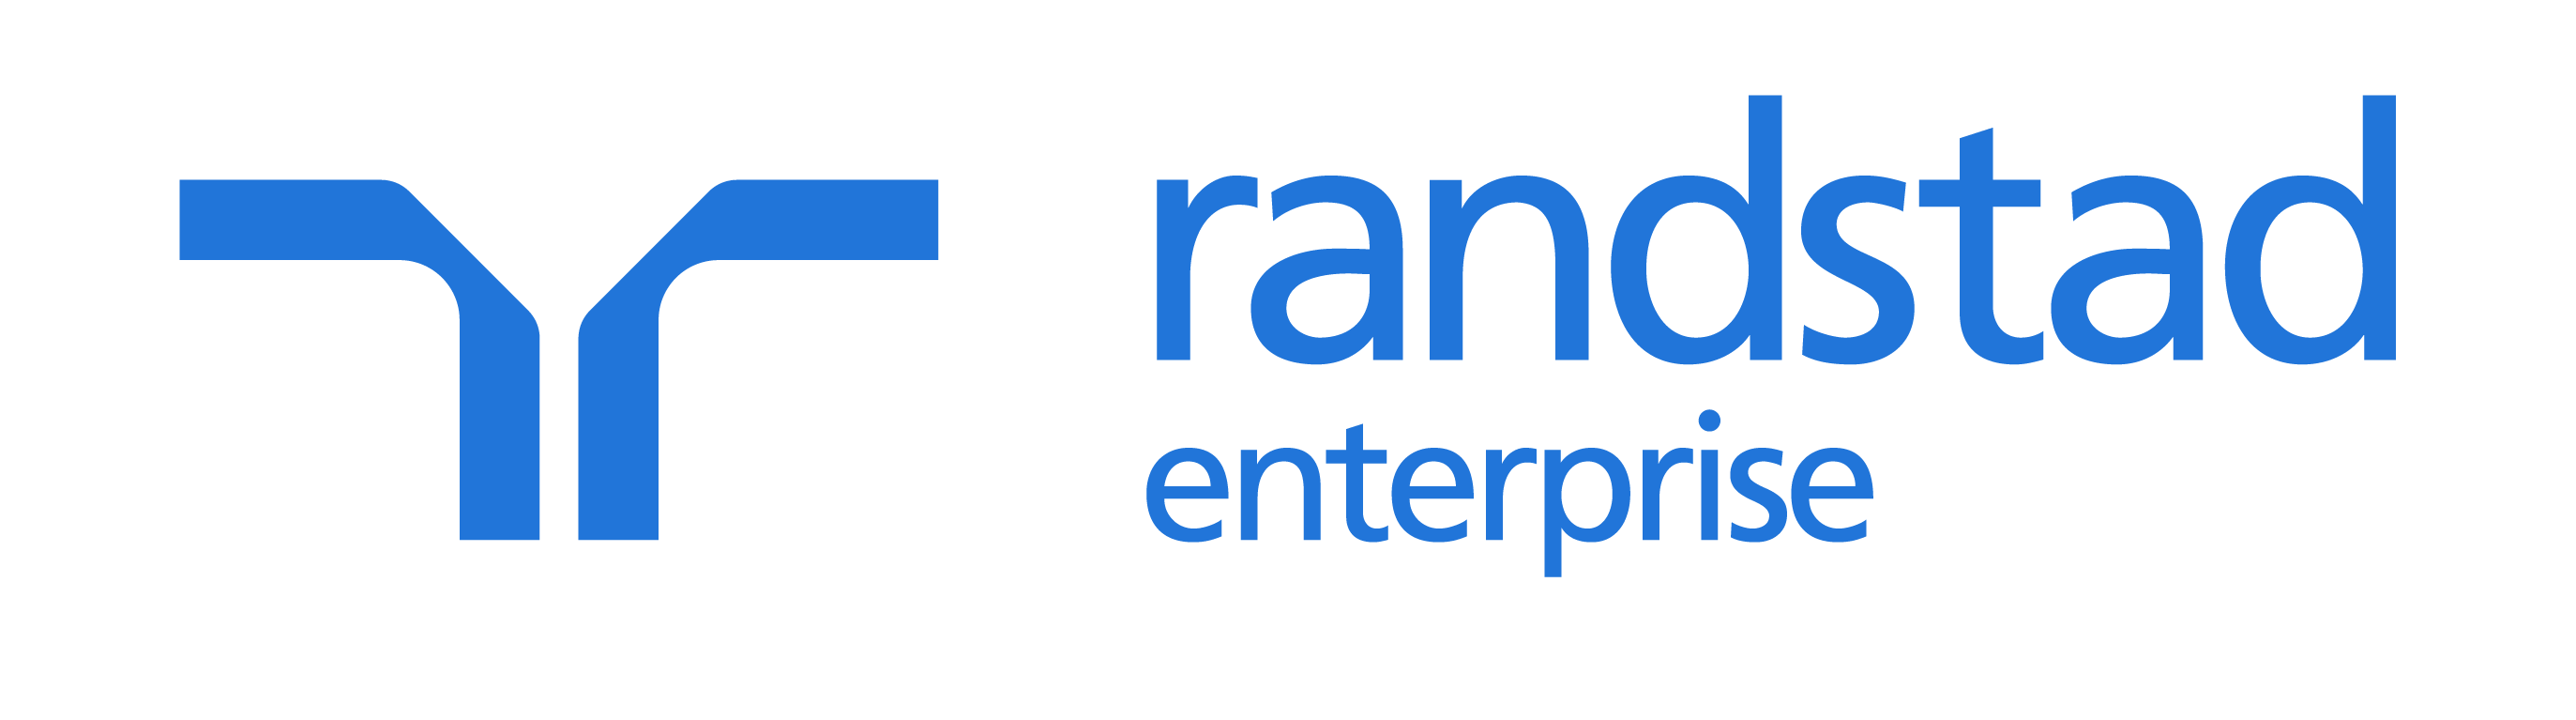 randstadt enterprise logo